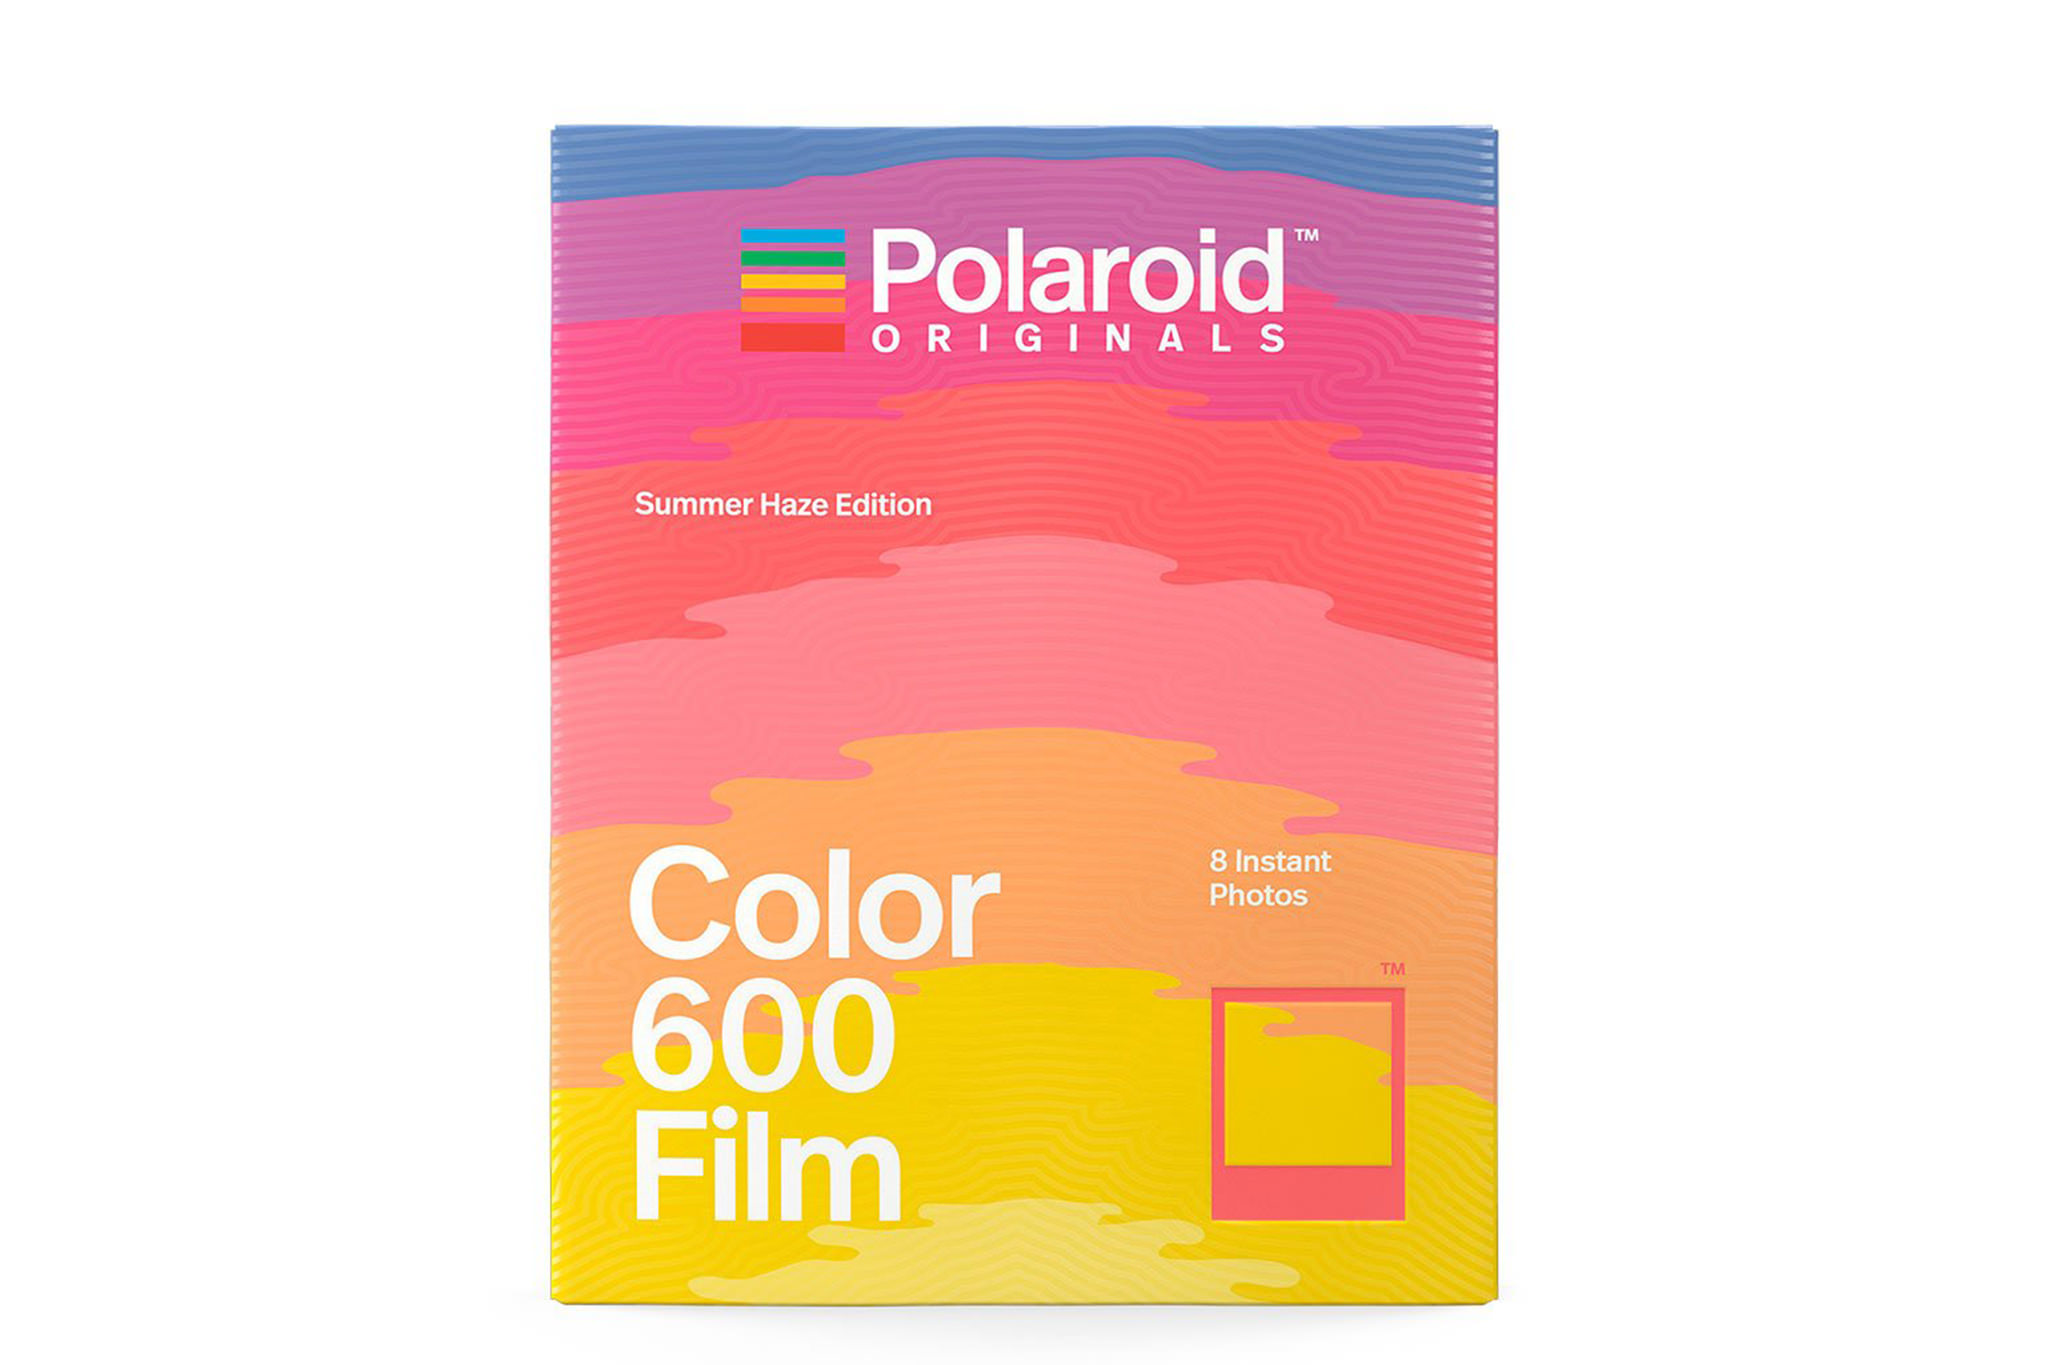 polaroid-originals-600-film-summer-haze-edition